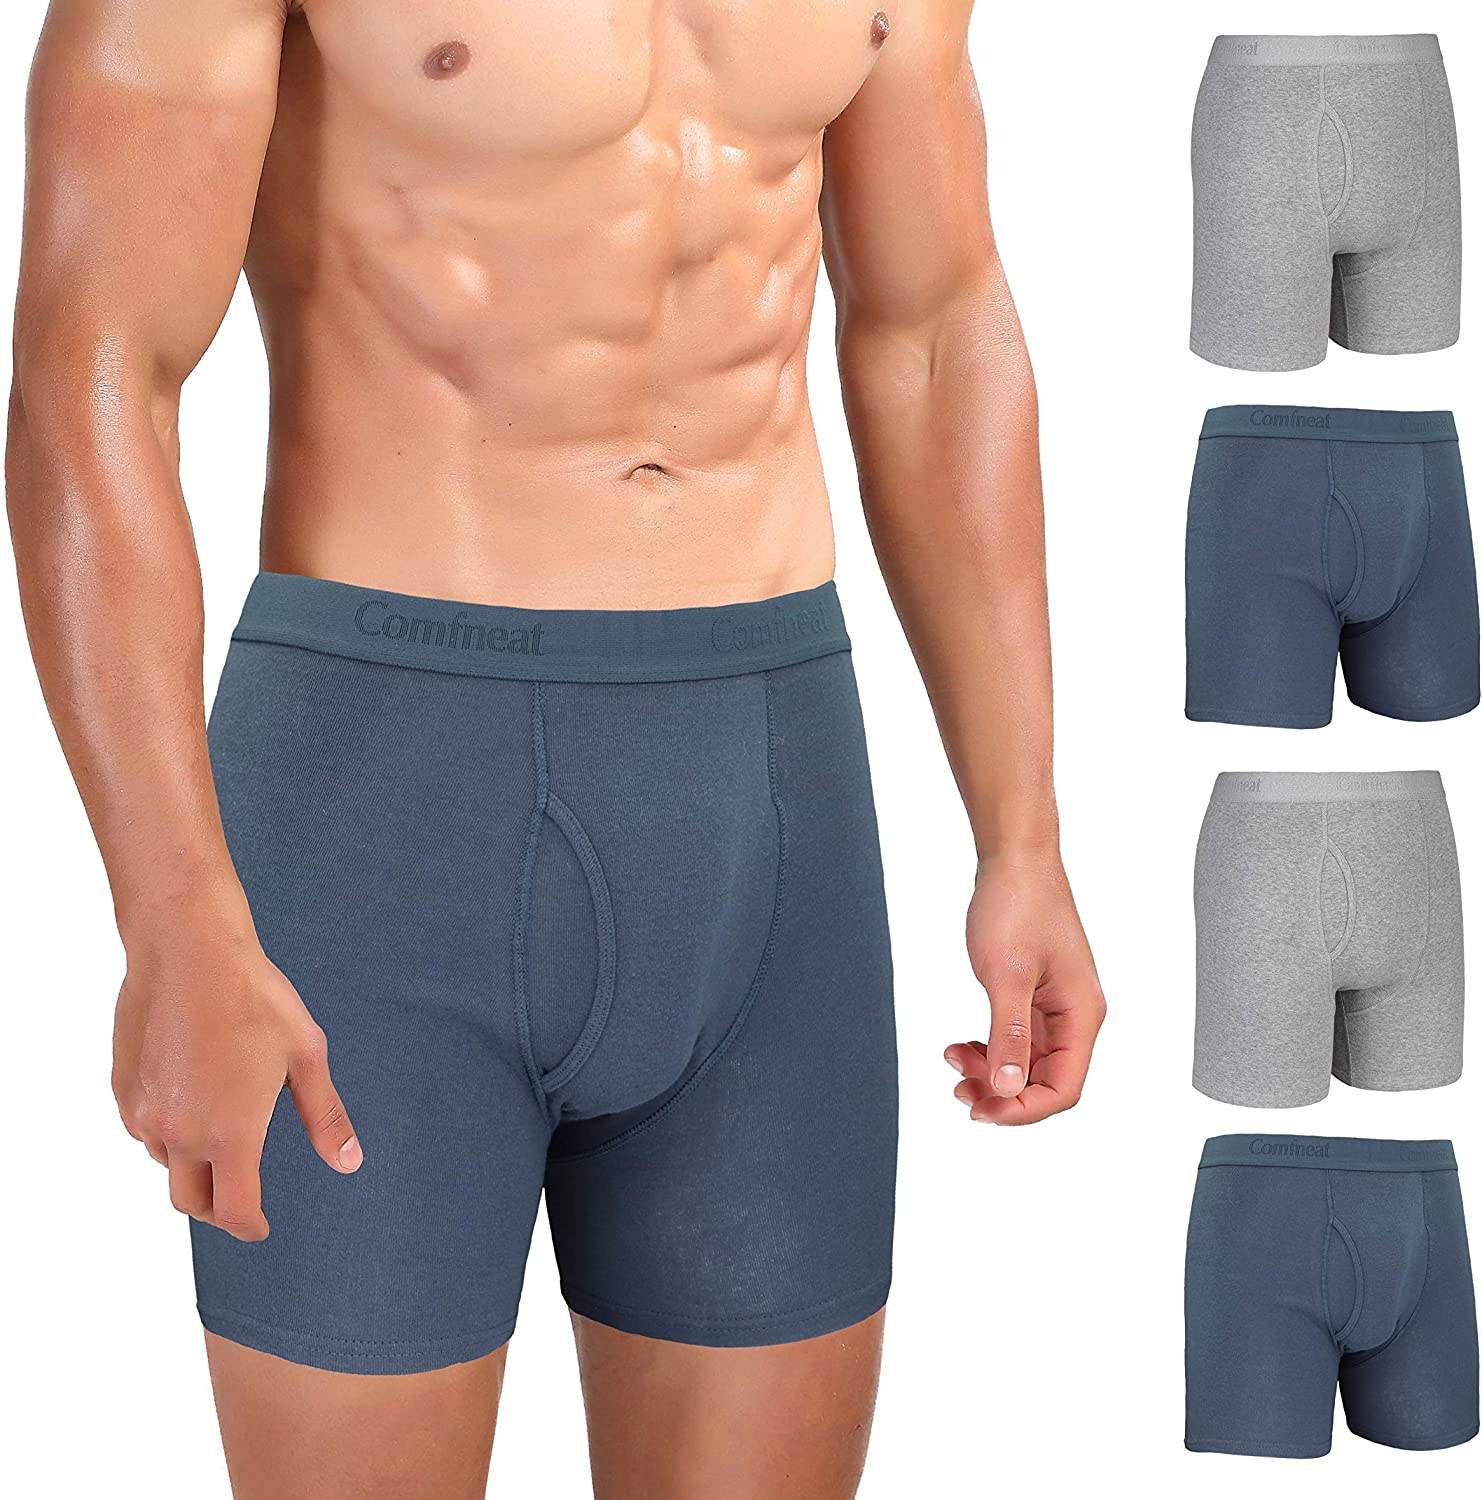 Men's Cotton Spandex and Inguinal Hernia prevention boxer underwear (Medium  33-36) - B&F Medical Supplies.com